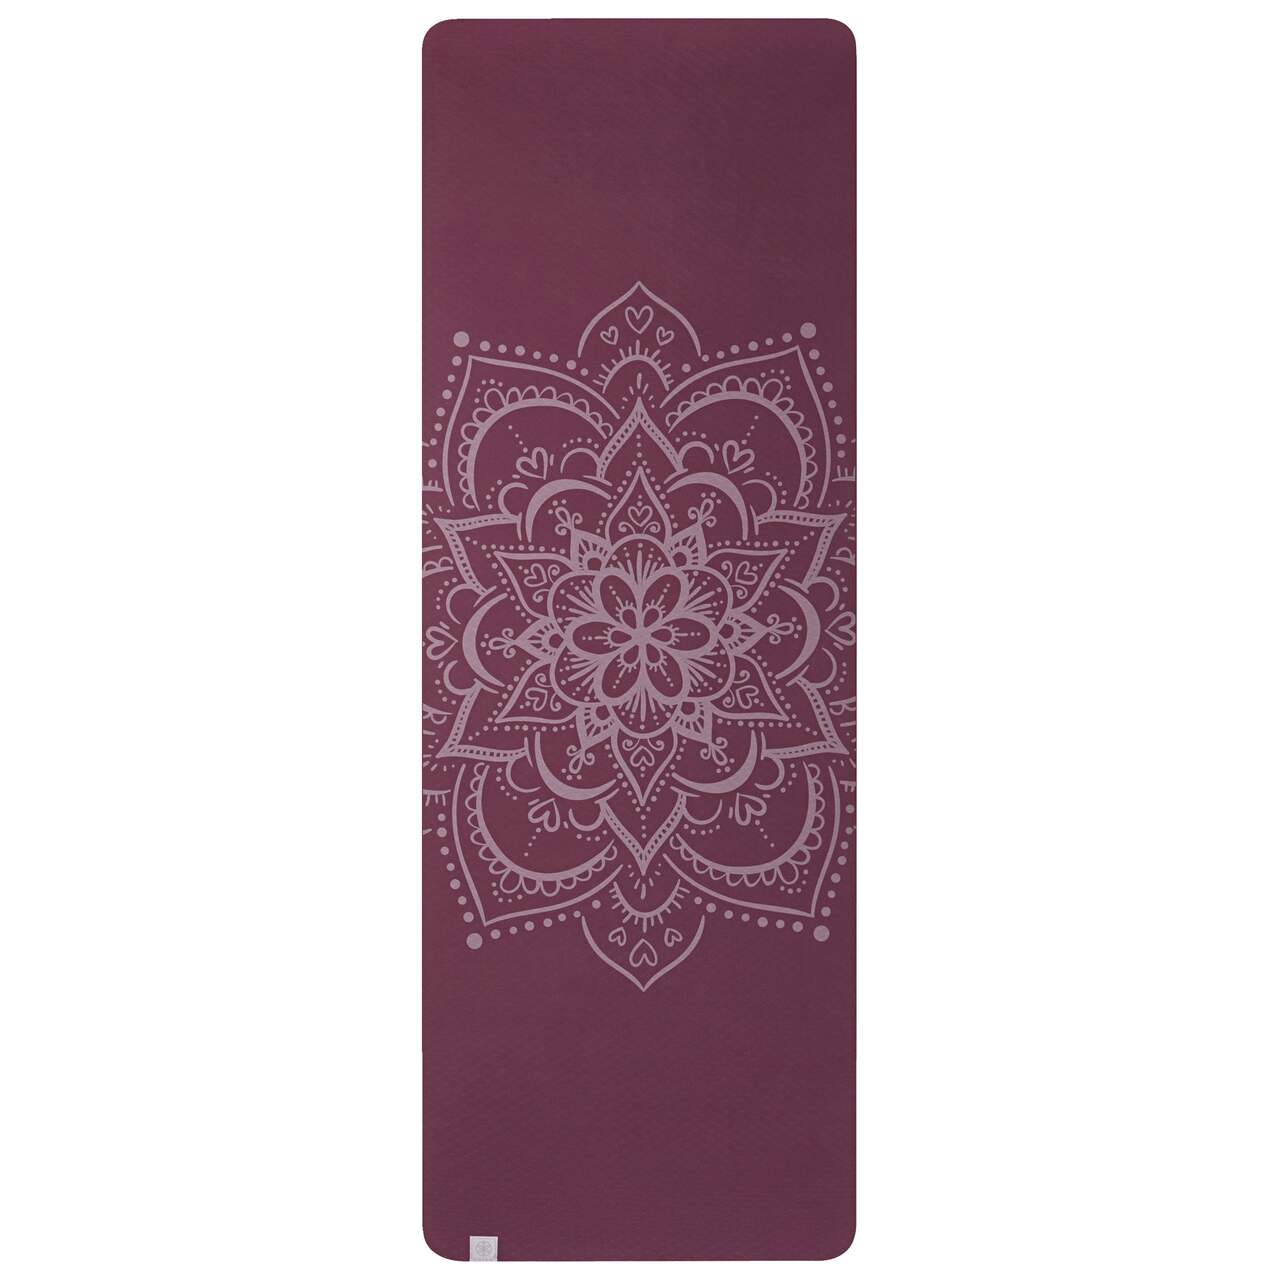 Gaiam Premium Print Reversible Yoga Mat, Elephant, 6mm, Mats -  Canada